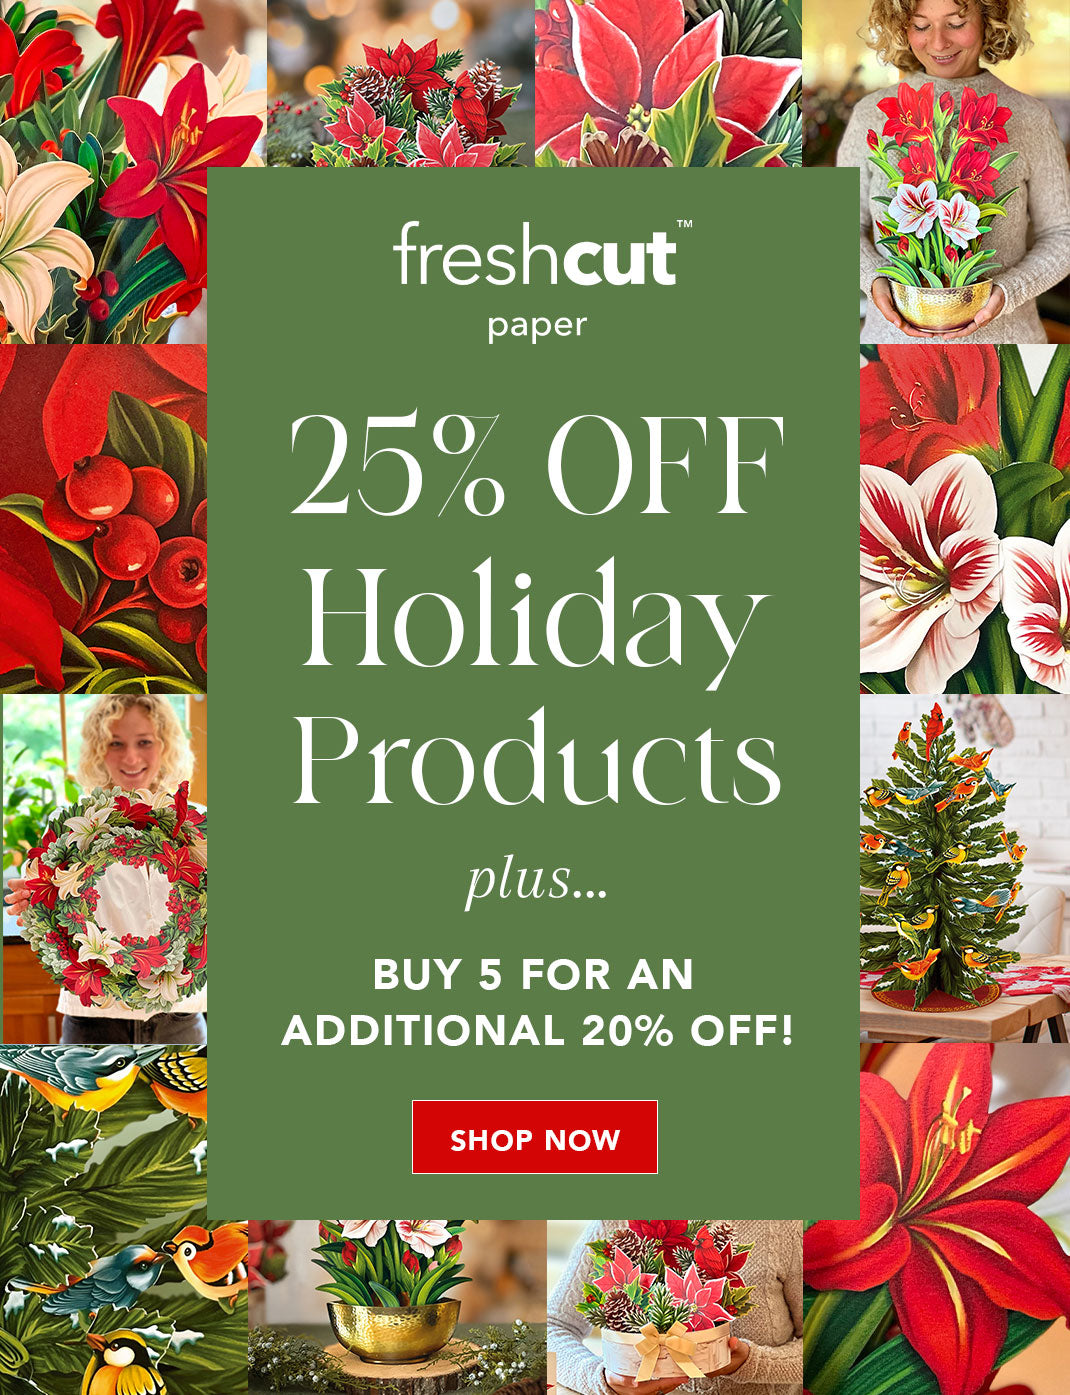 FreshCut Paper LLC - Market Floor Display includes 6 Long Market